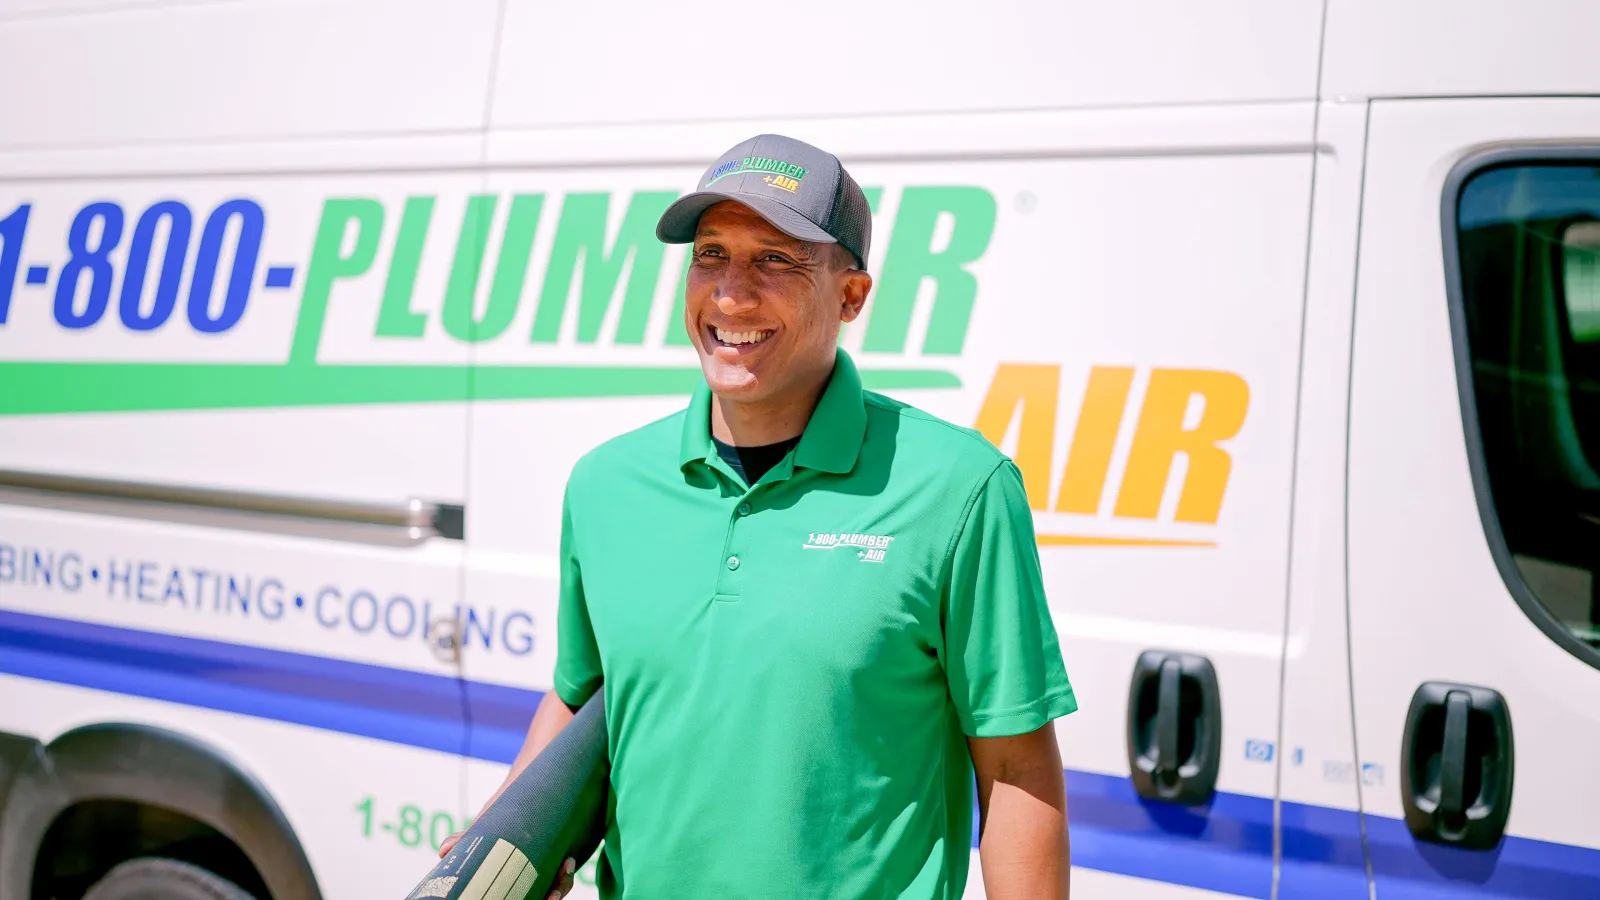 A 1-800-Plumber +Air of Monterey plumber and van